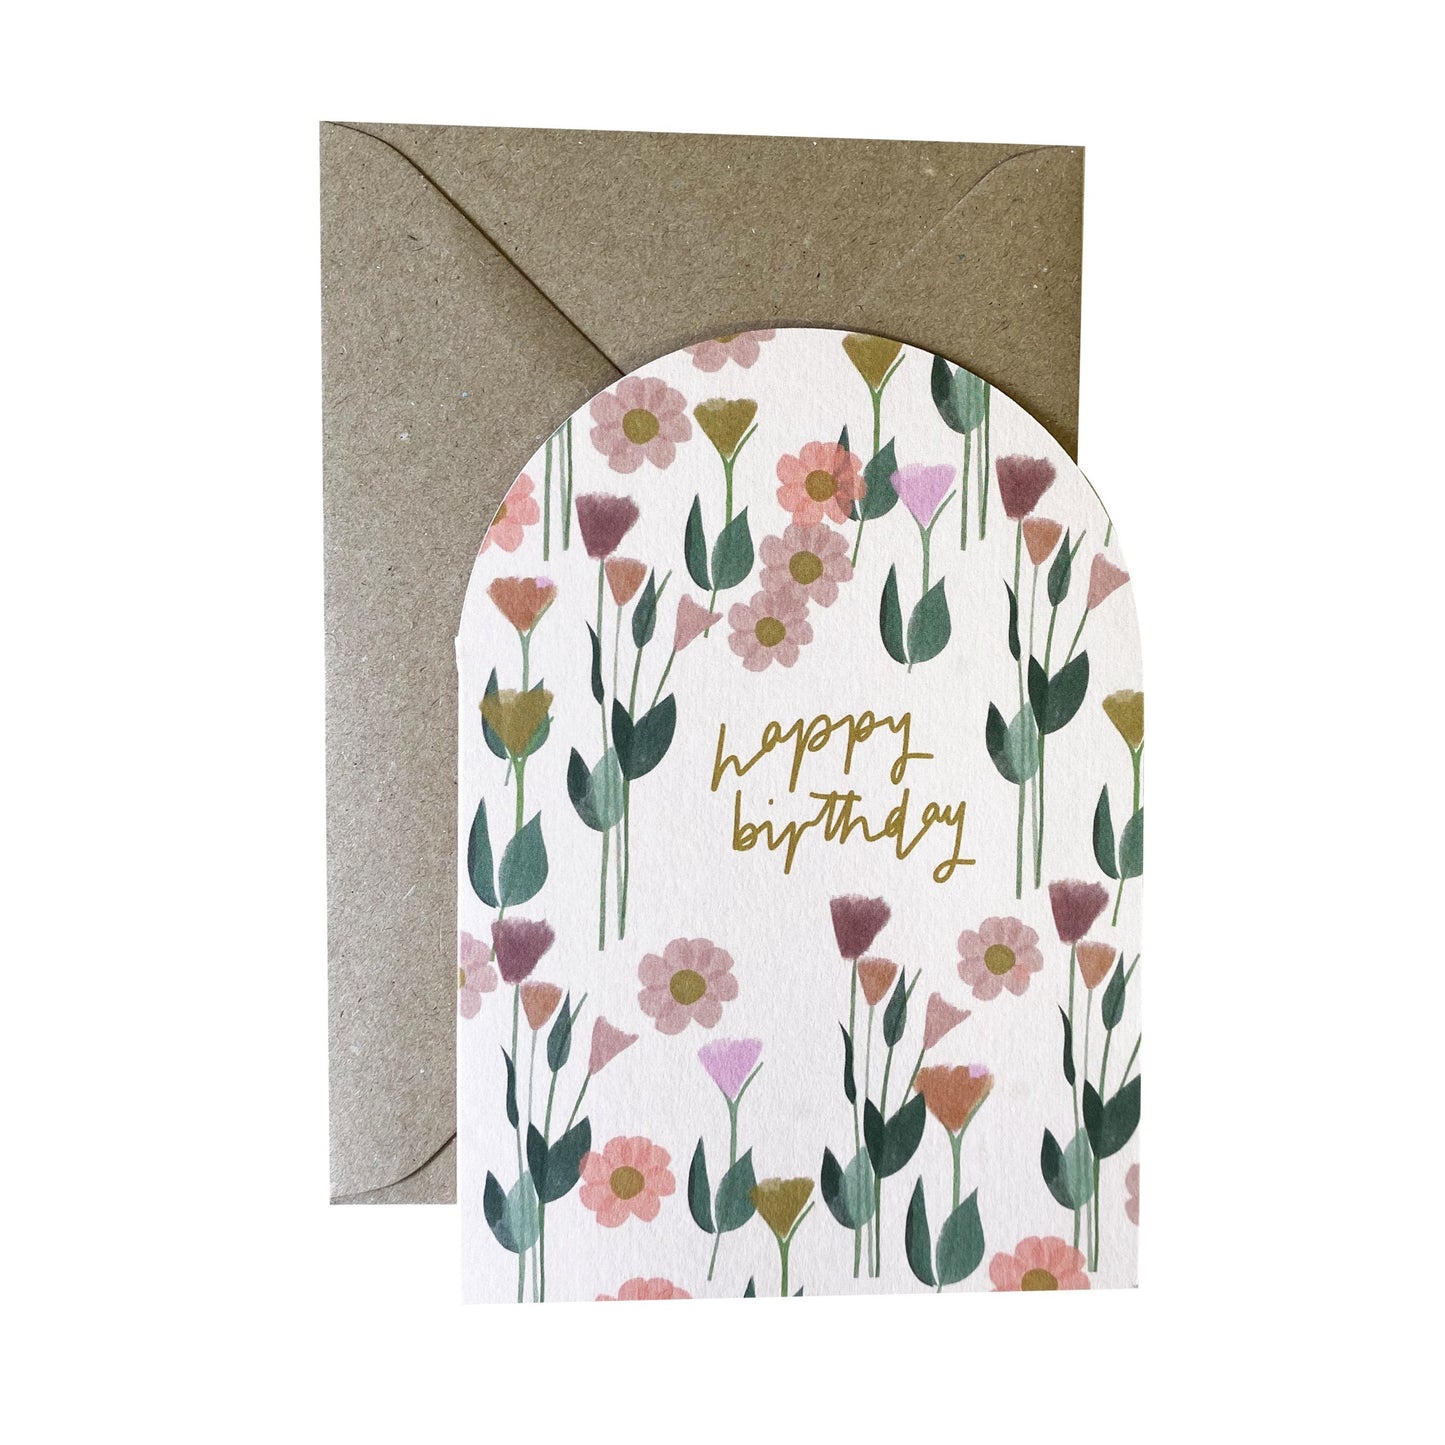 Floral 'Happy Birthday' greetings card